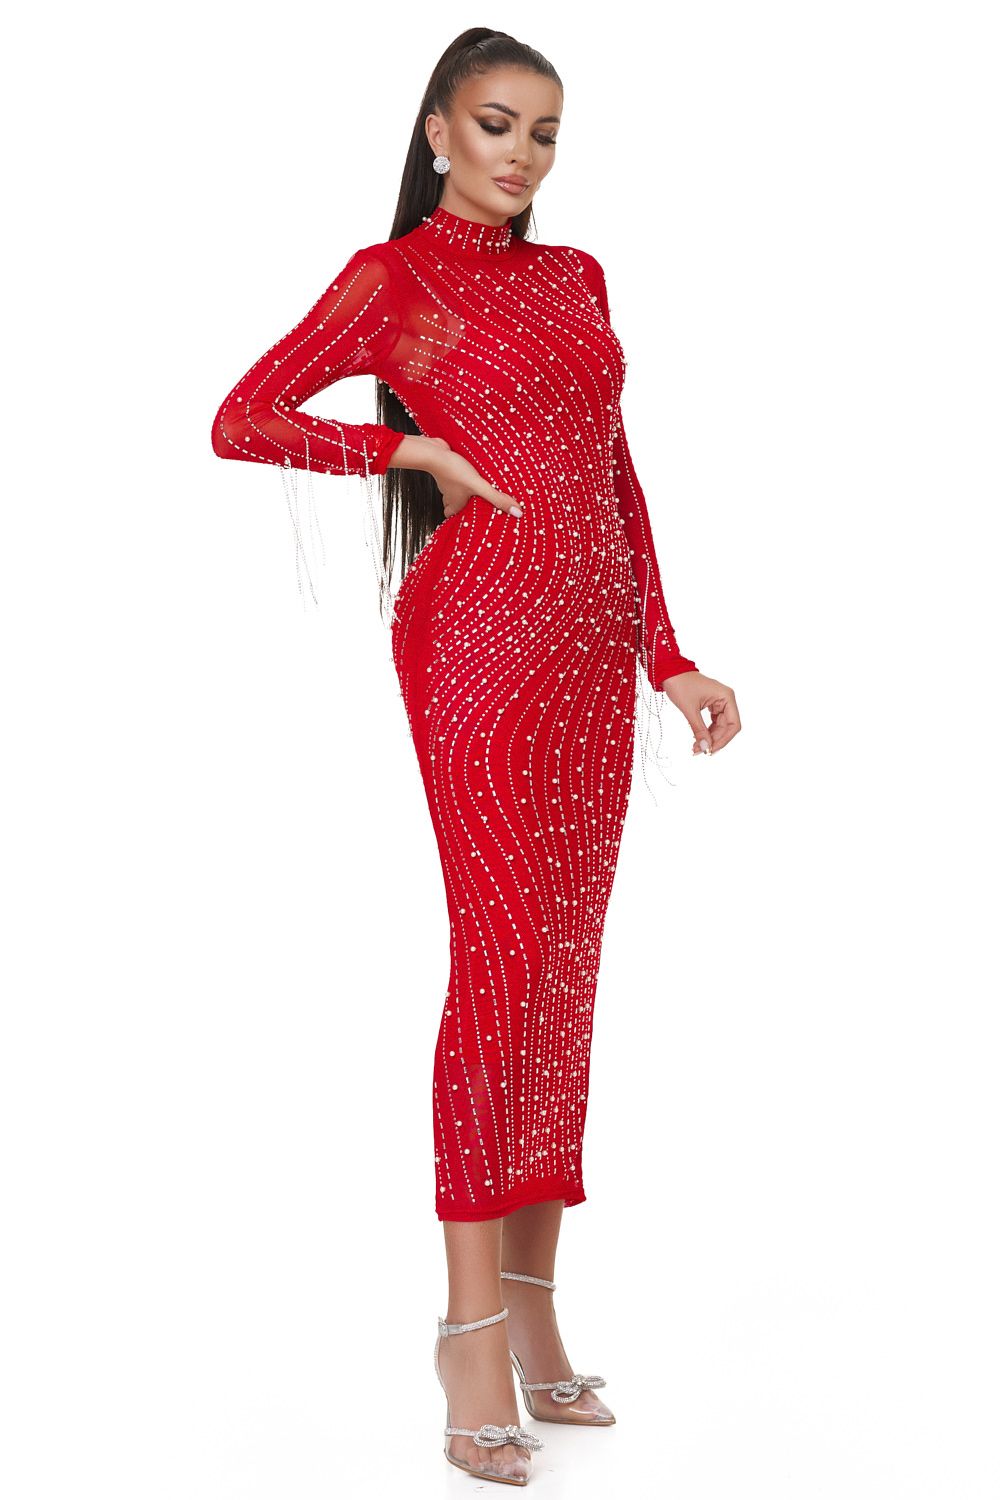 Ladies long red dress Radisea Bogas